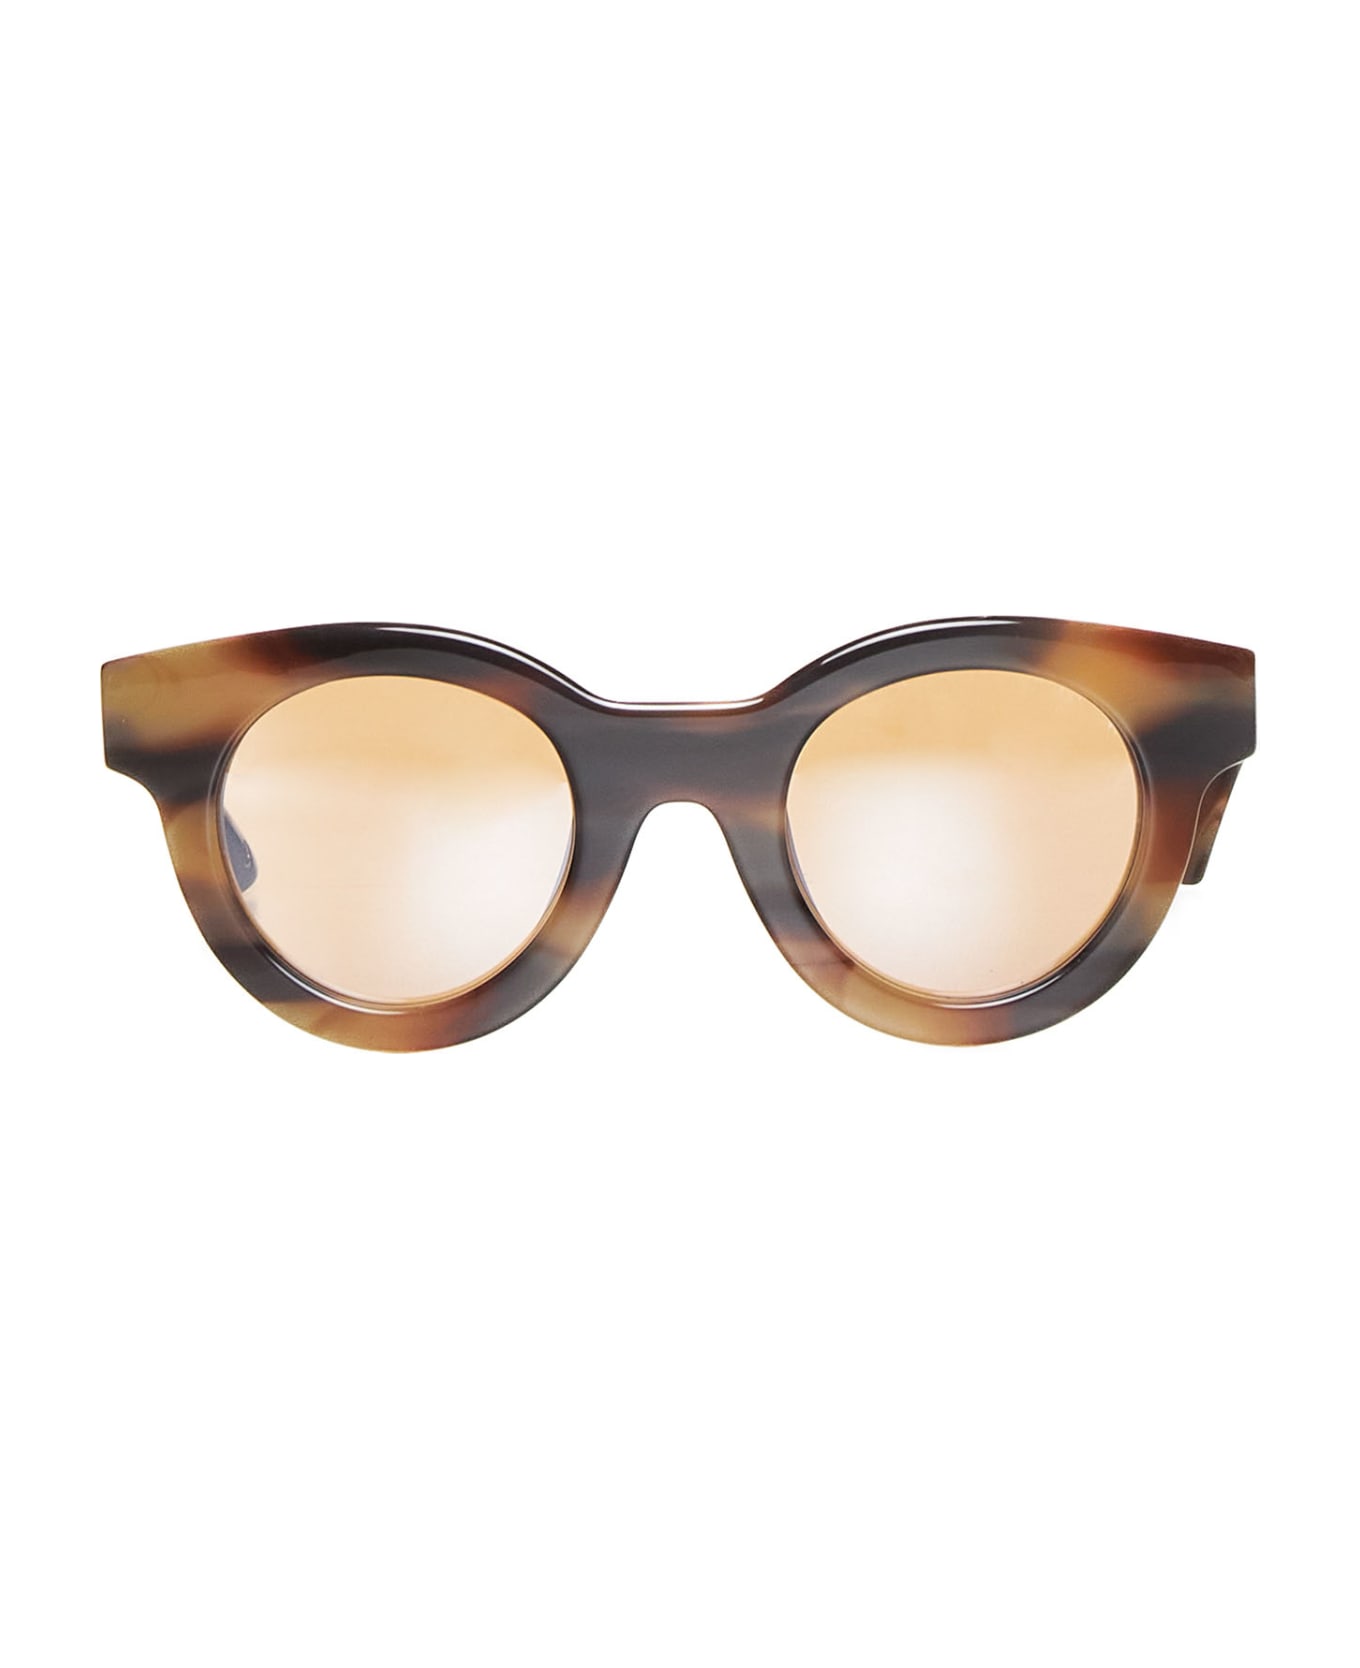 g.o.d Sunglasses - Sea tortoise w brown flash len